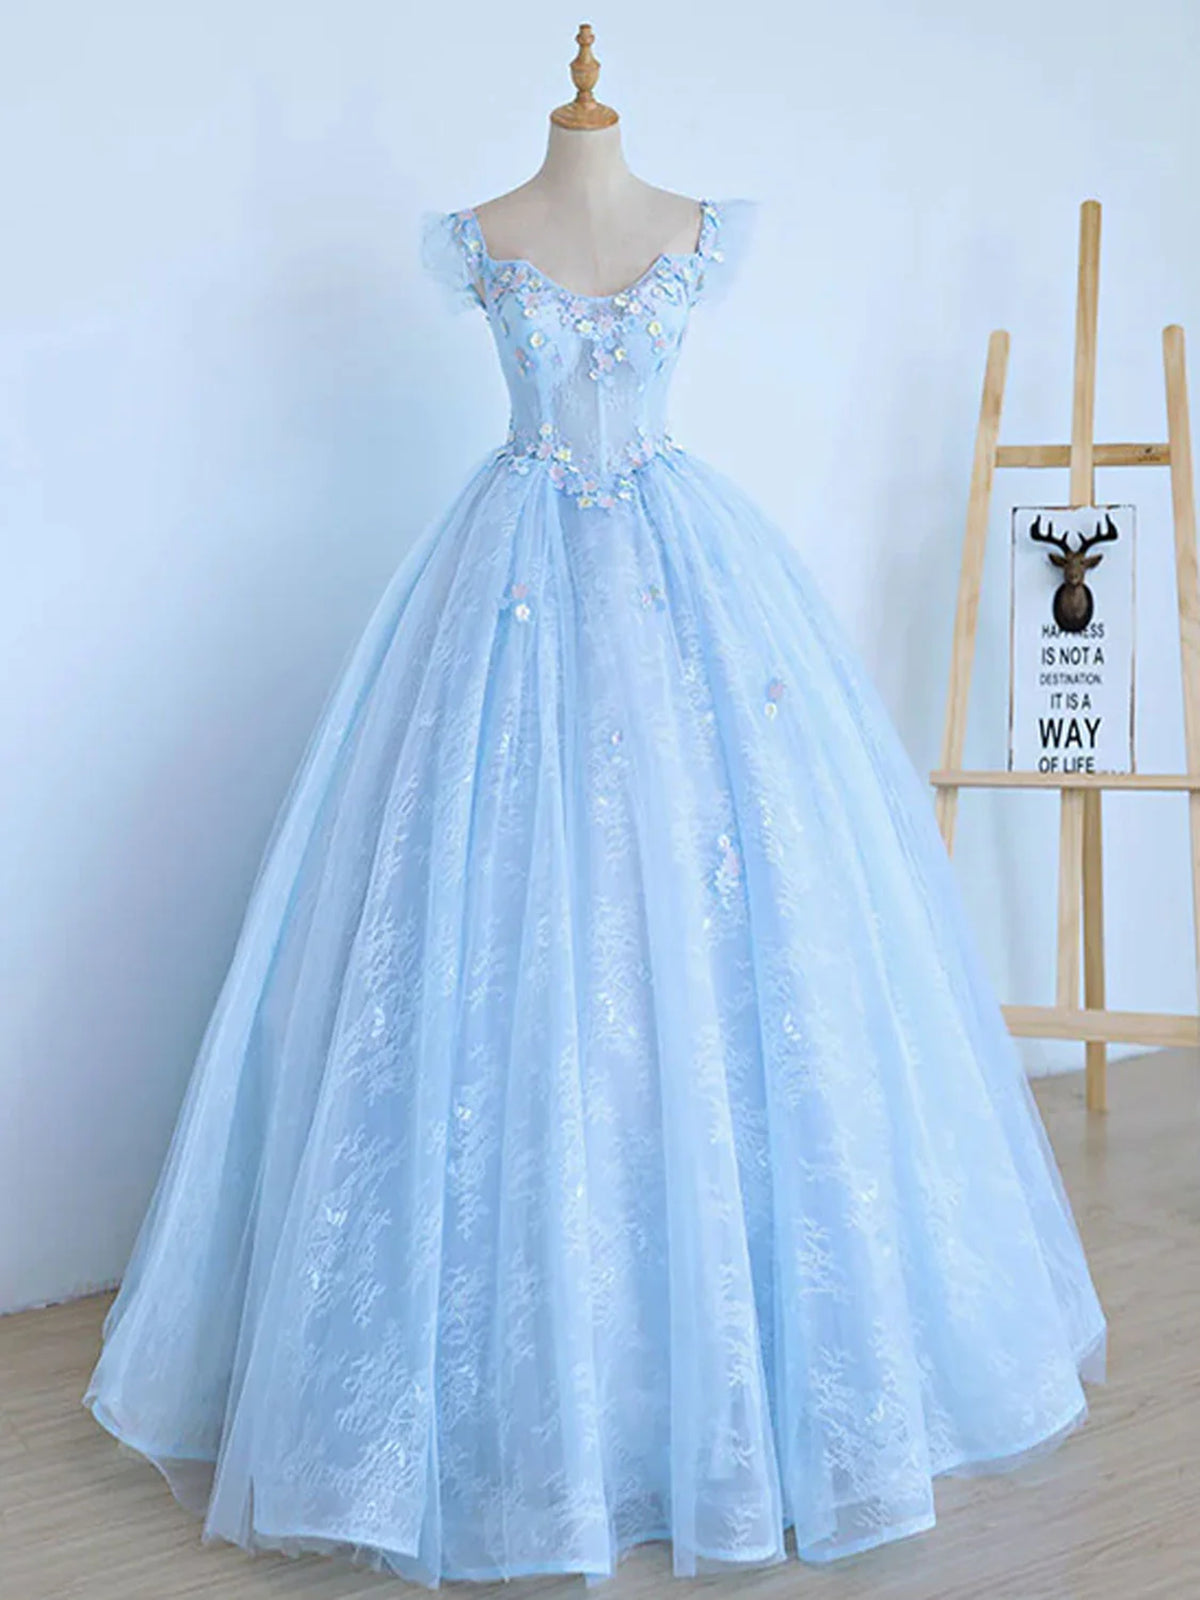 Blue Long Lace Floral Corset Prom Dresses, Long Blue Lace Corset Formal Evening Dresses with Flowers outfit, Elegant Wedding